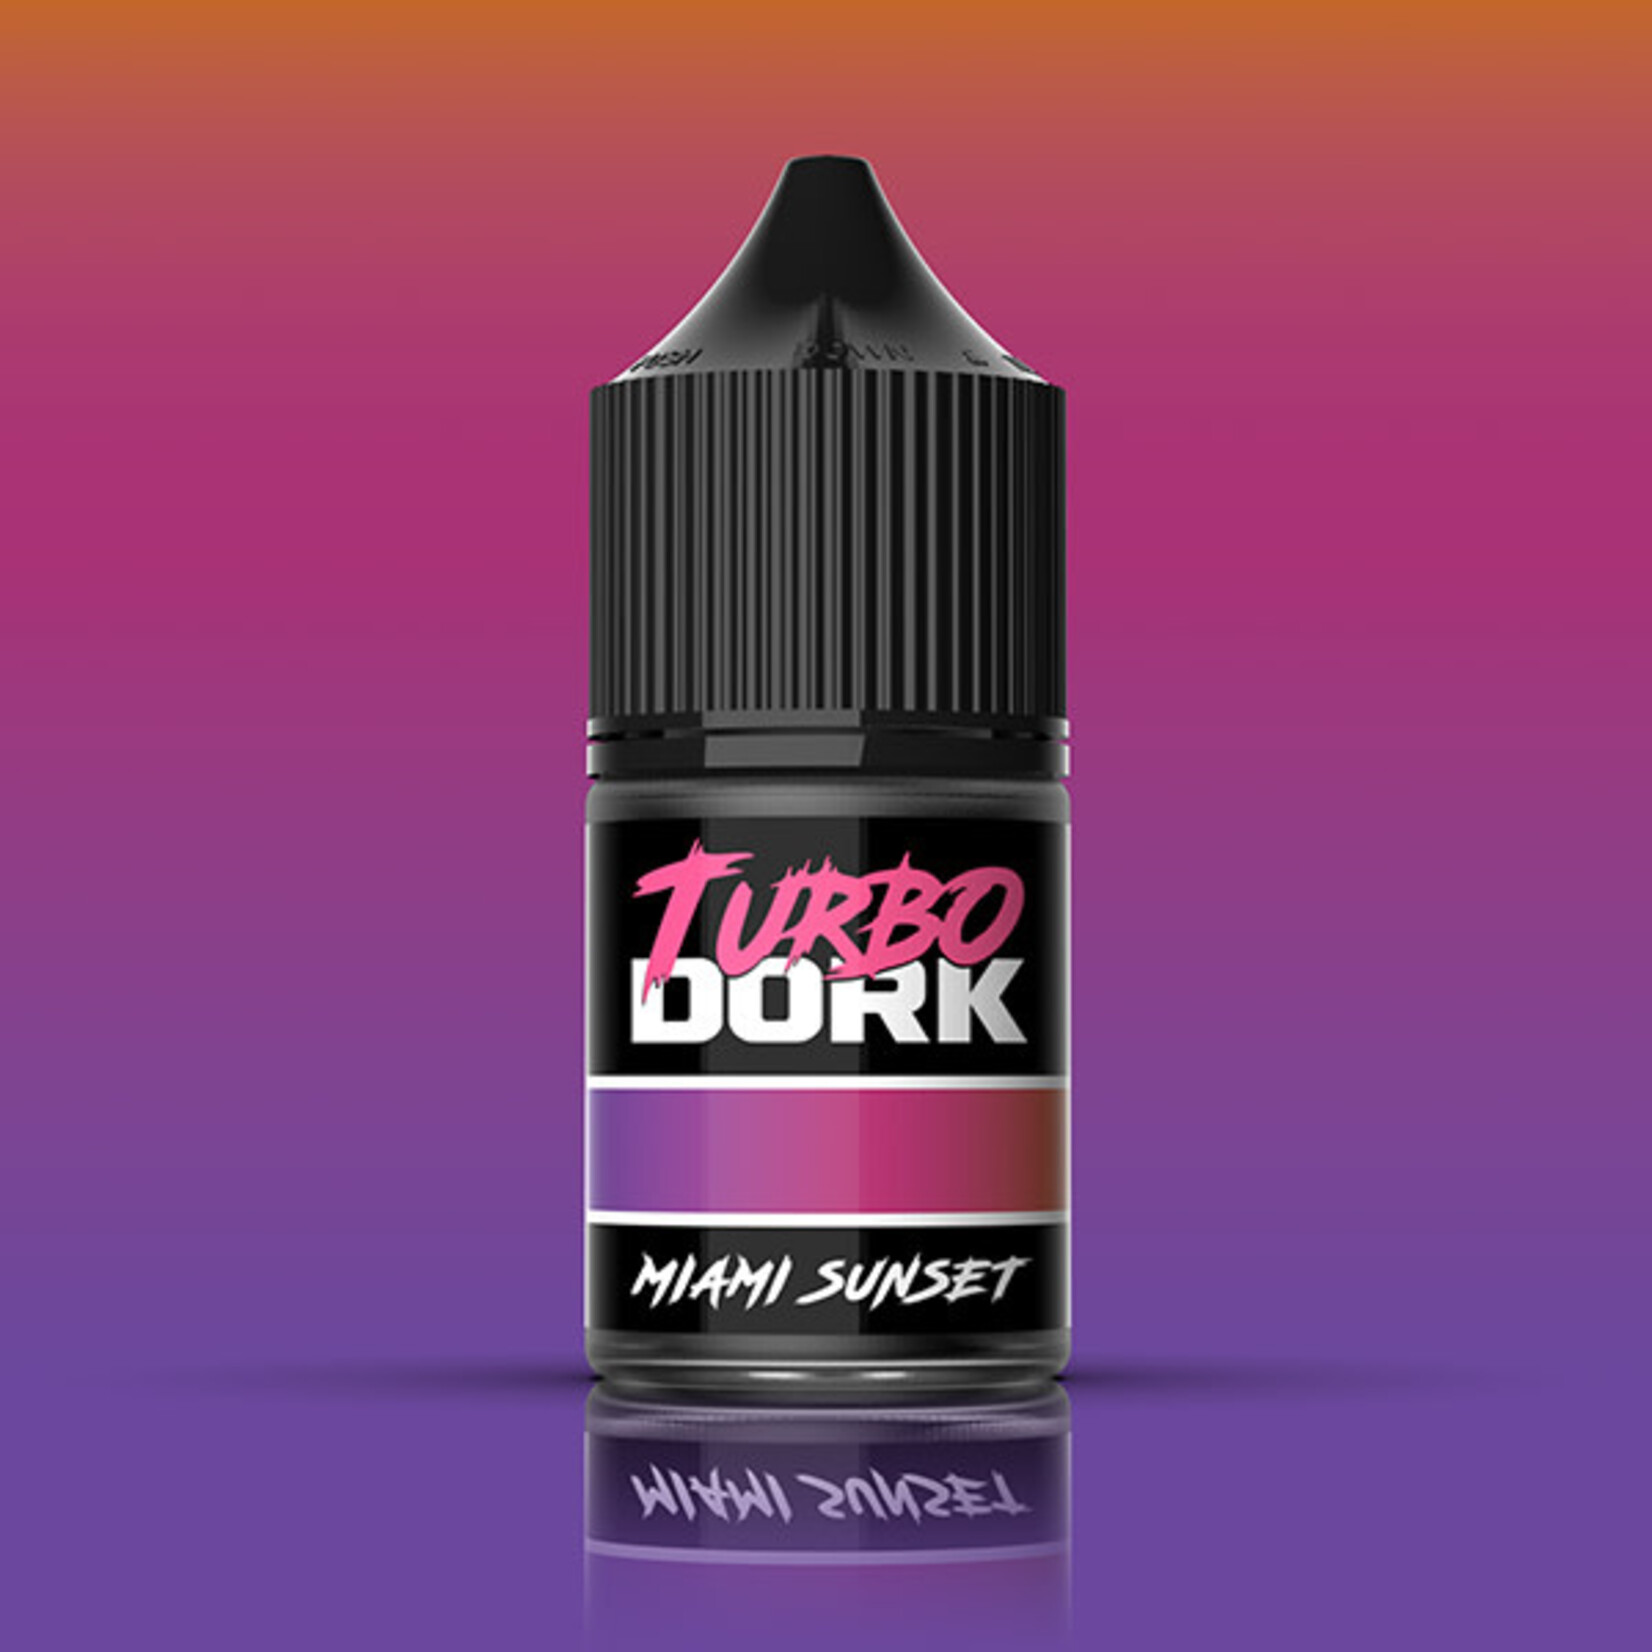 Turbo Dork Turboshift Acrylic Paint - Miami Sunset